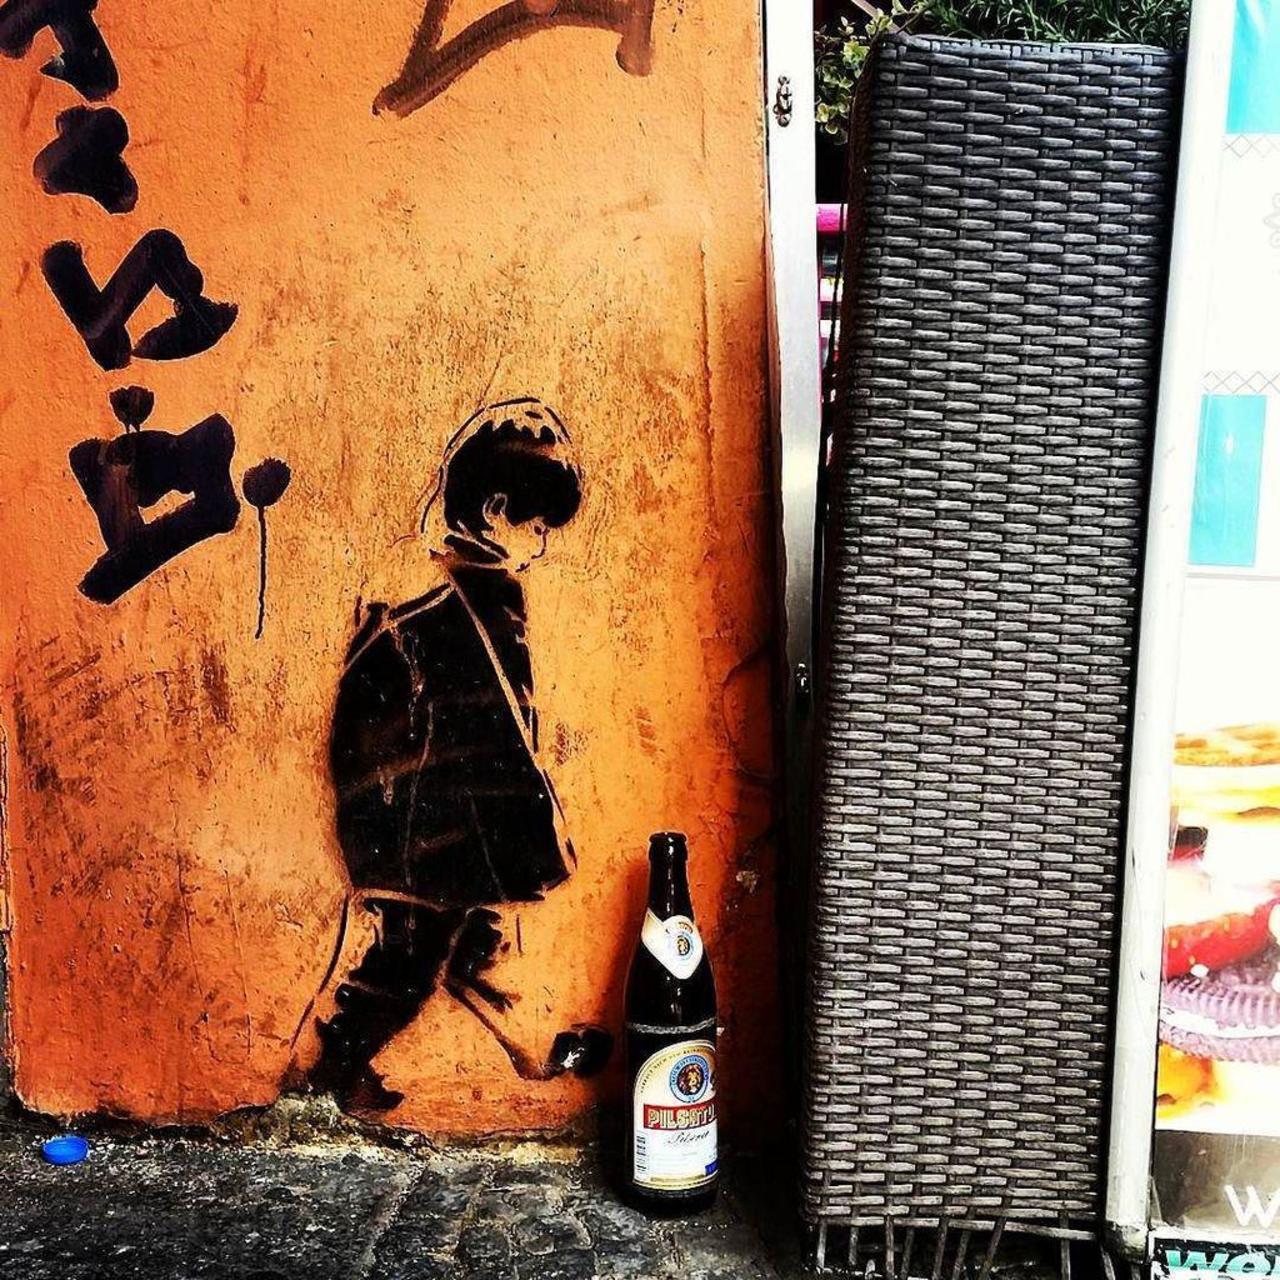 Art by @icyandsot
#Graffiti #instadaily #instaphoto #streetart #streetartberlin #Berlin #Germany #streetartphotogra… http://t.co/1WQJYJNqwL